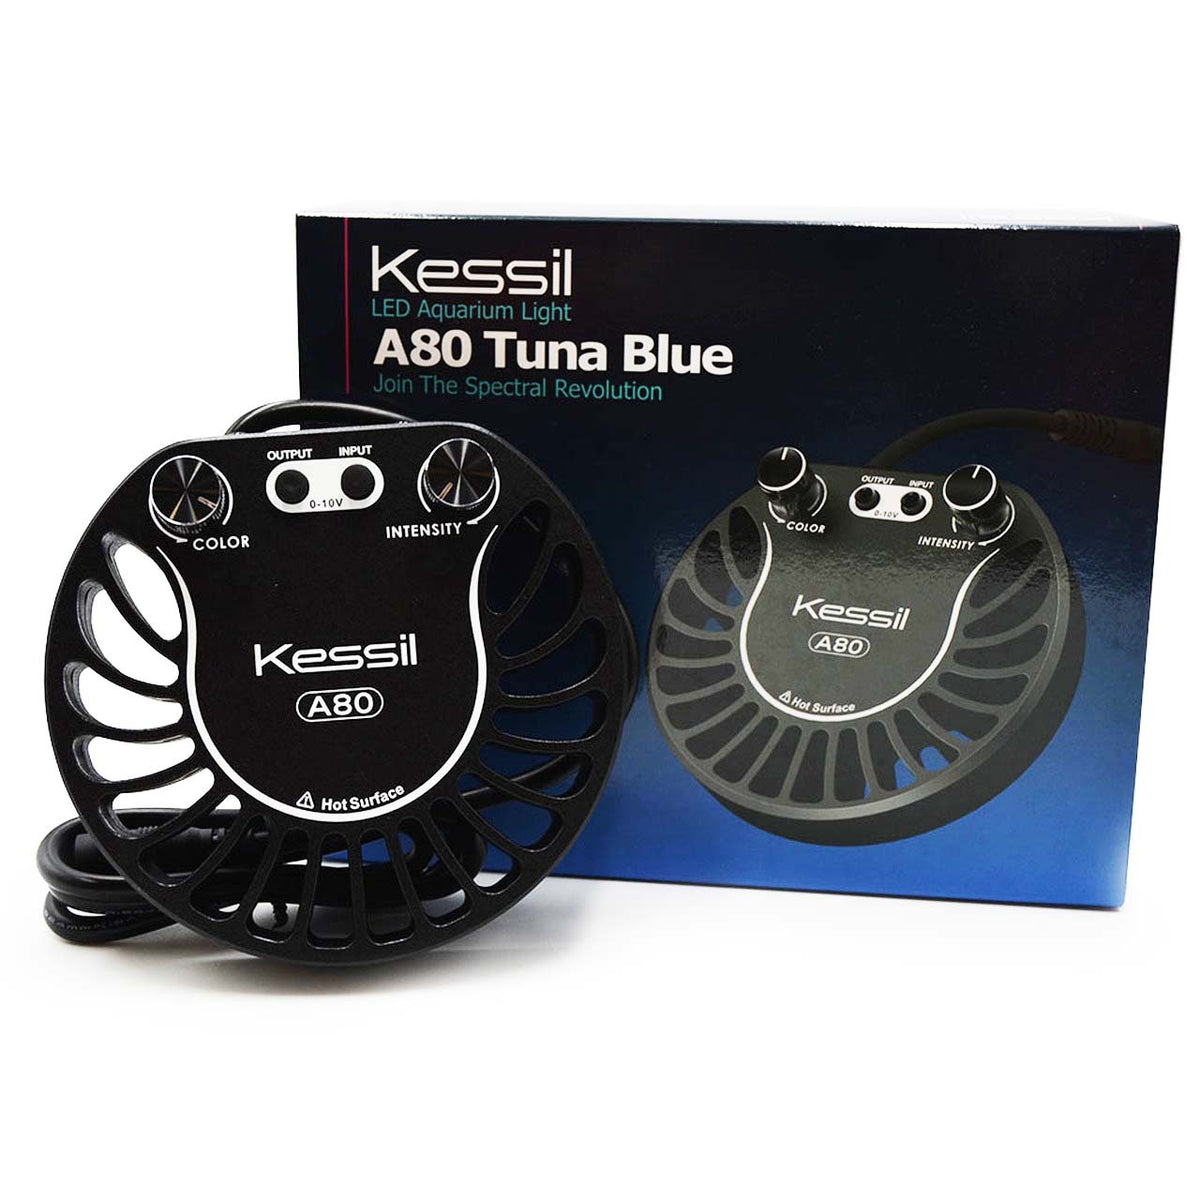 Kessil A80 Tuna Blue Saltwater Aquarium LED